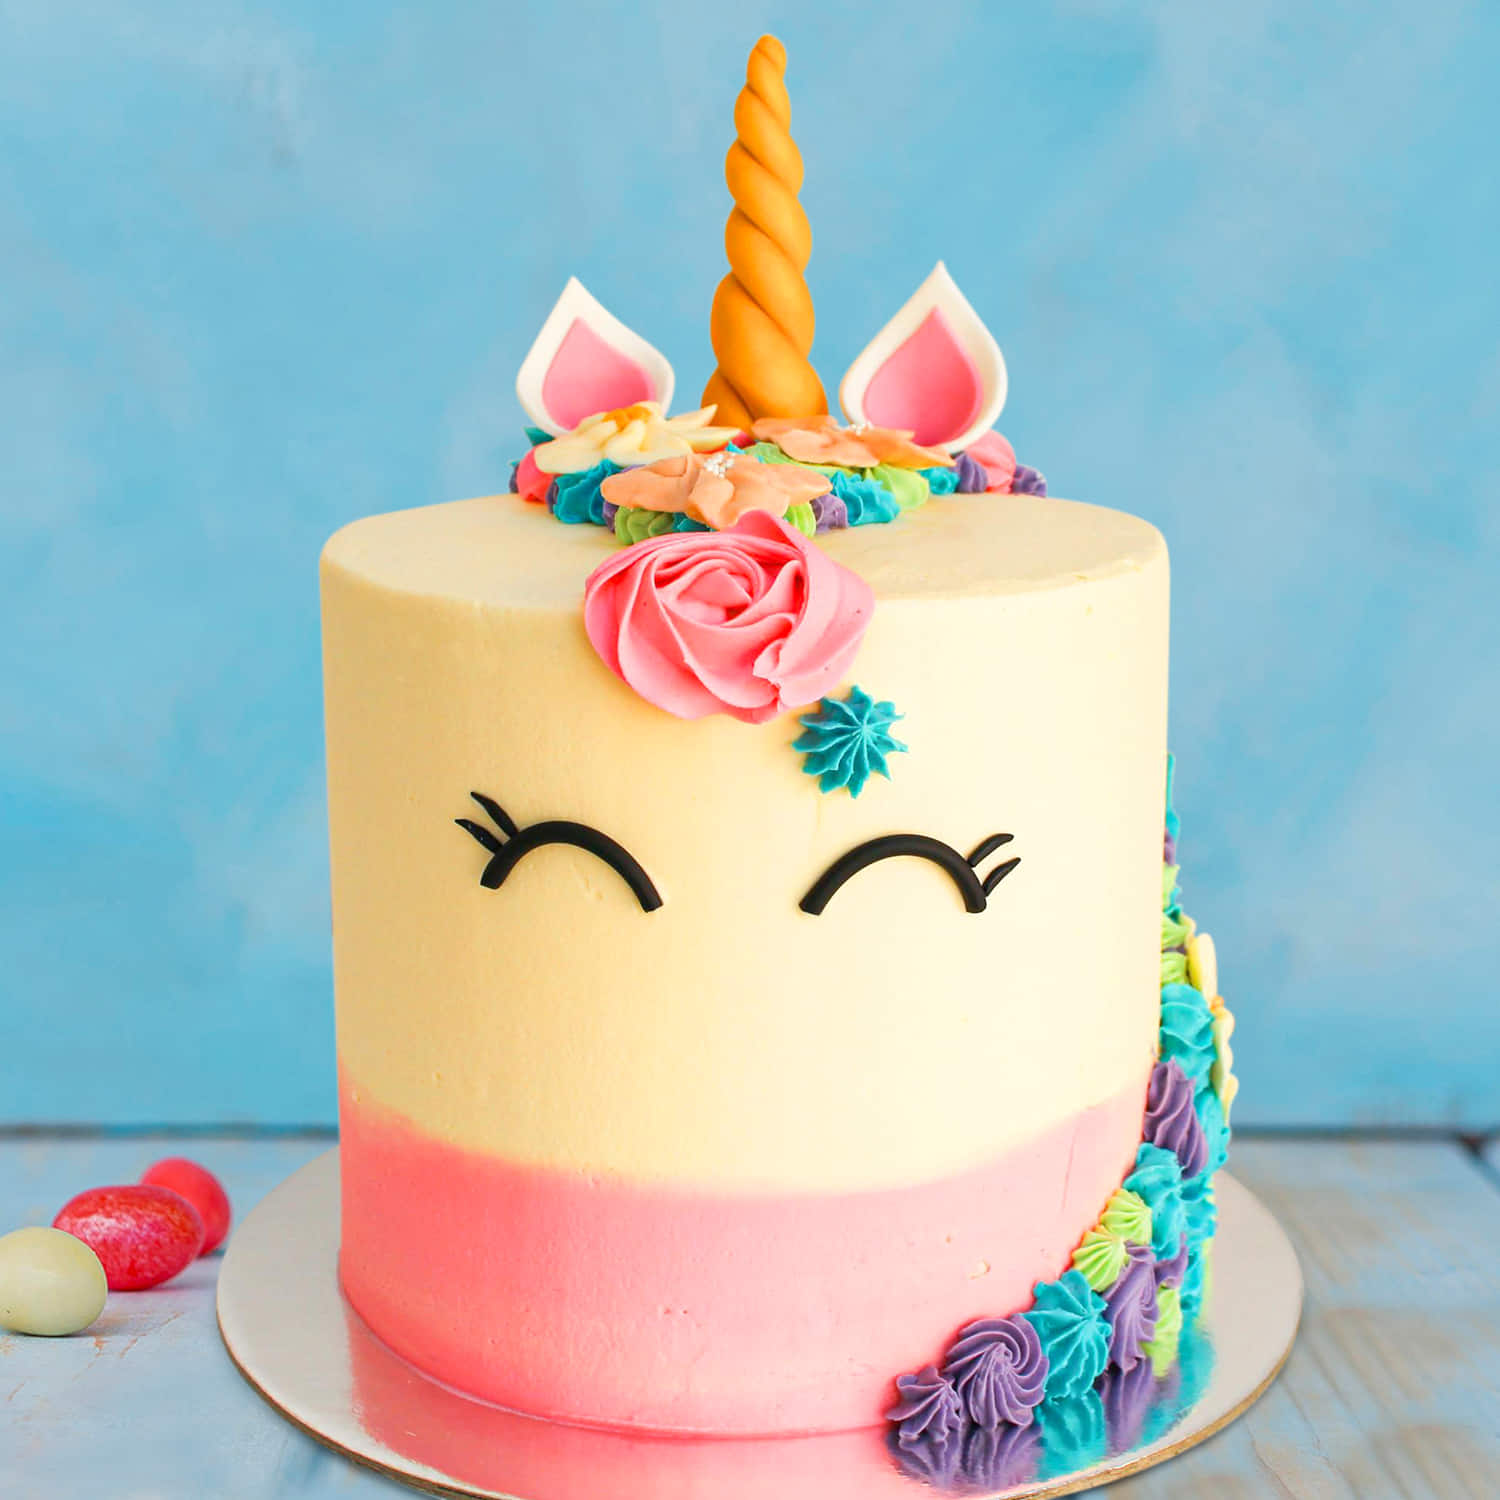 Premium Photo | Delicious birthday cake on shiny light background